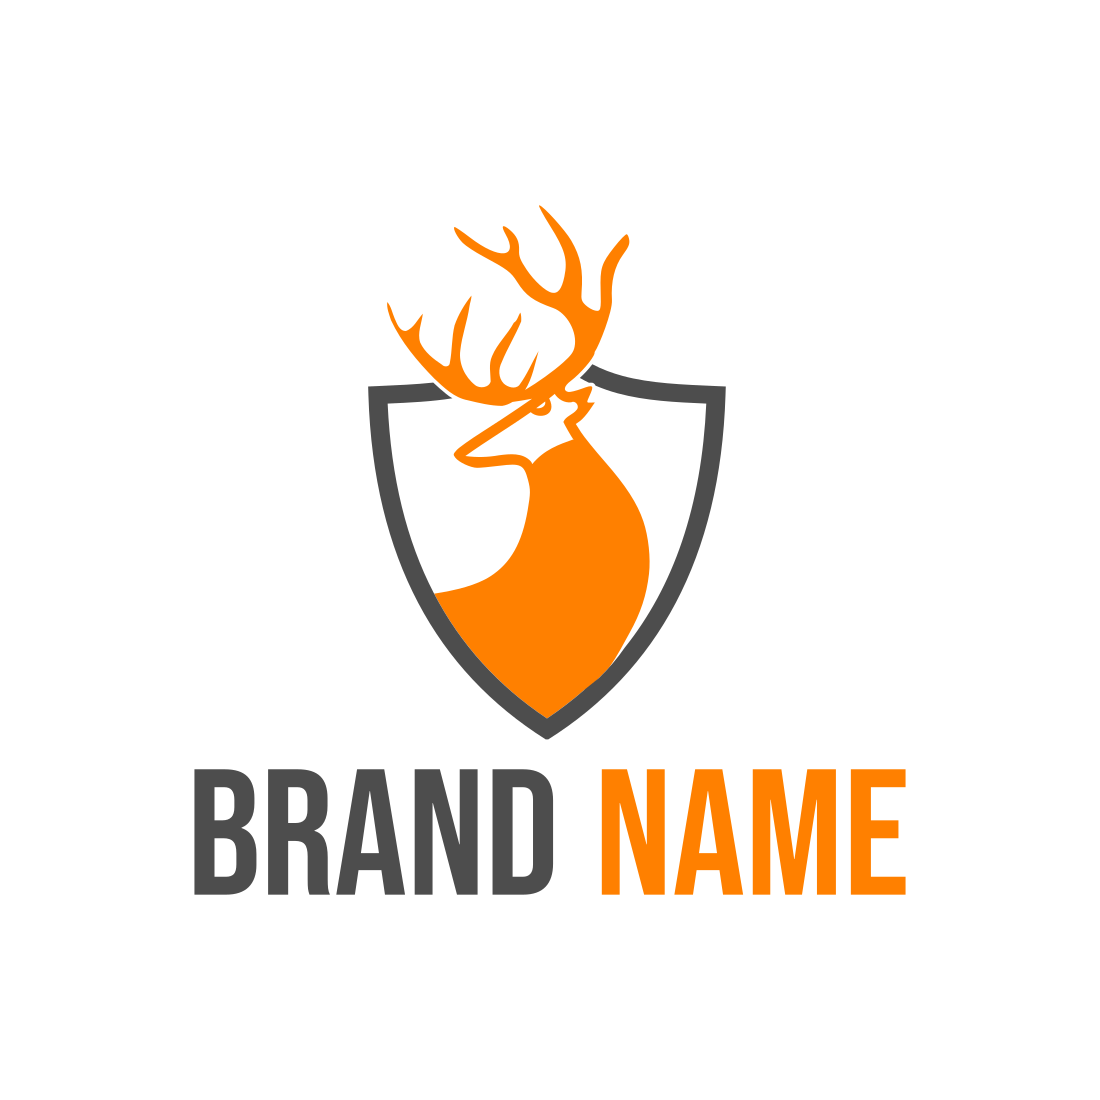 Deer Badge Creative Logo Design cover image.